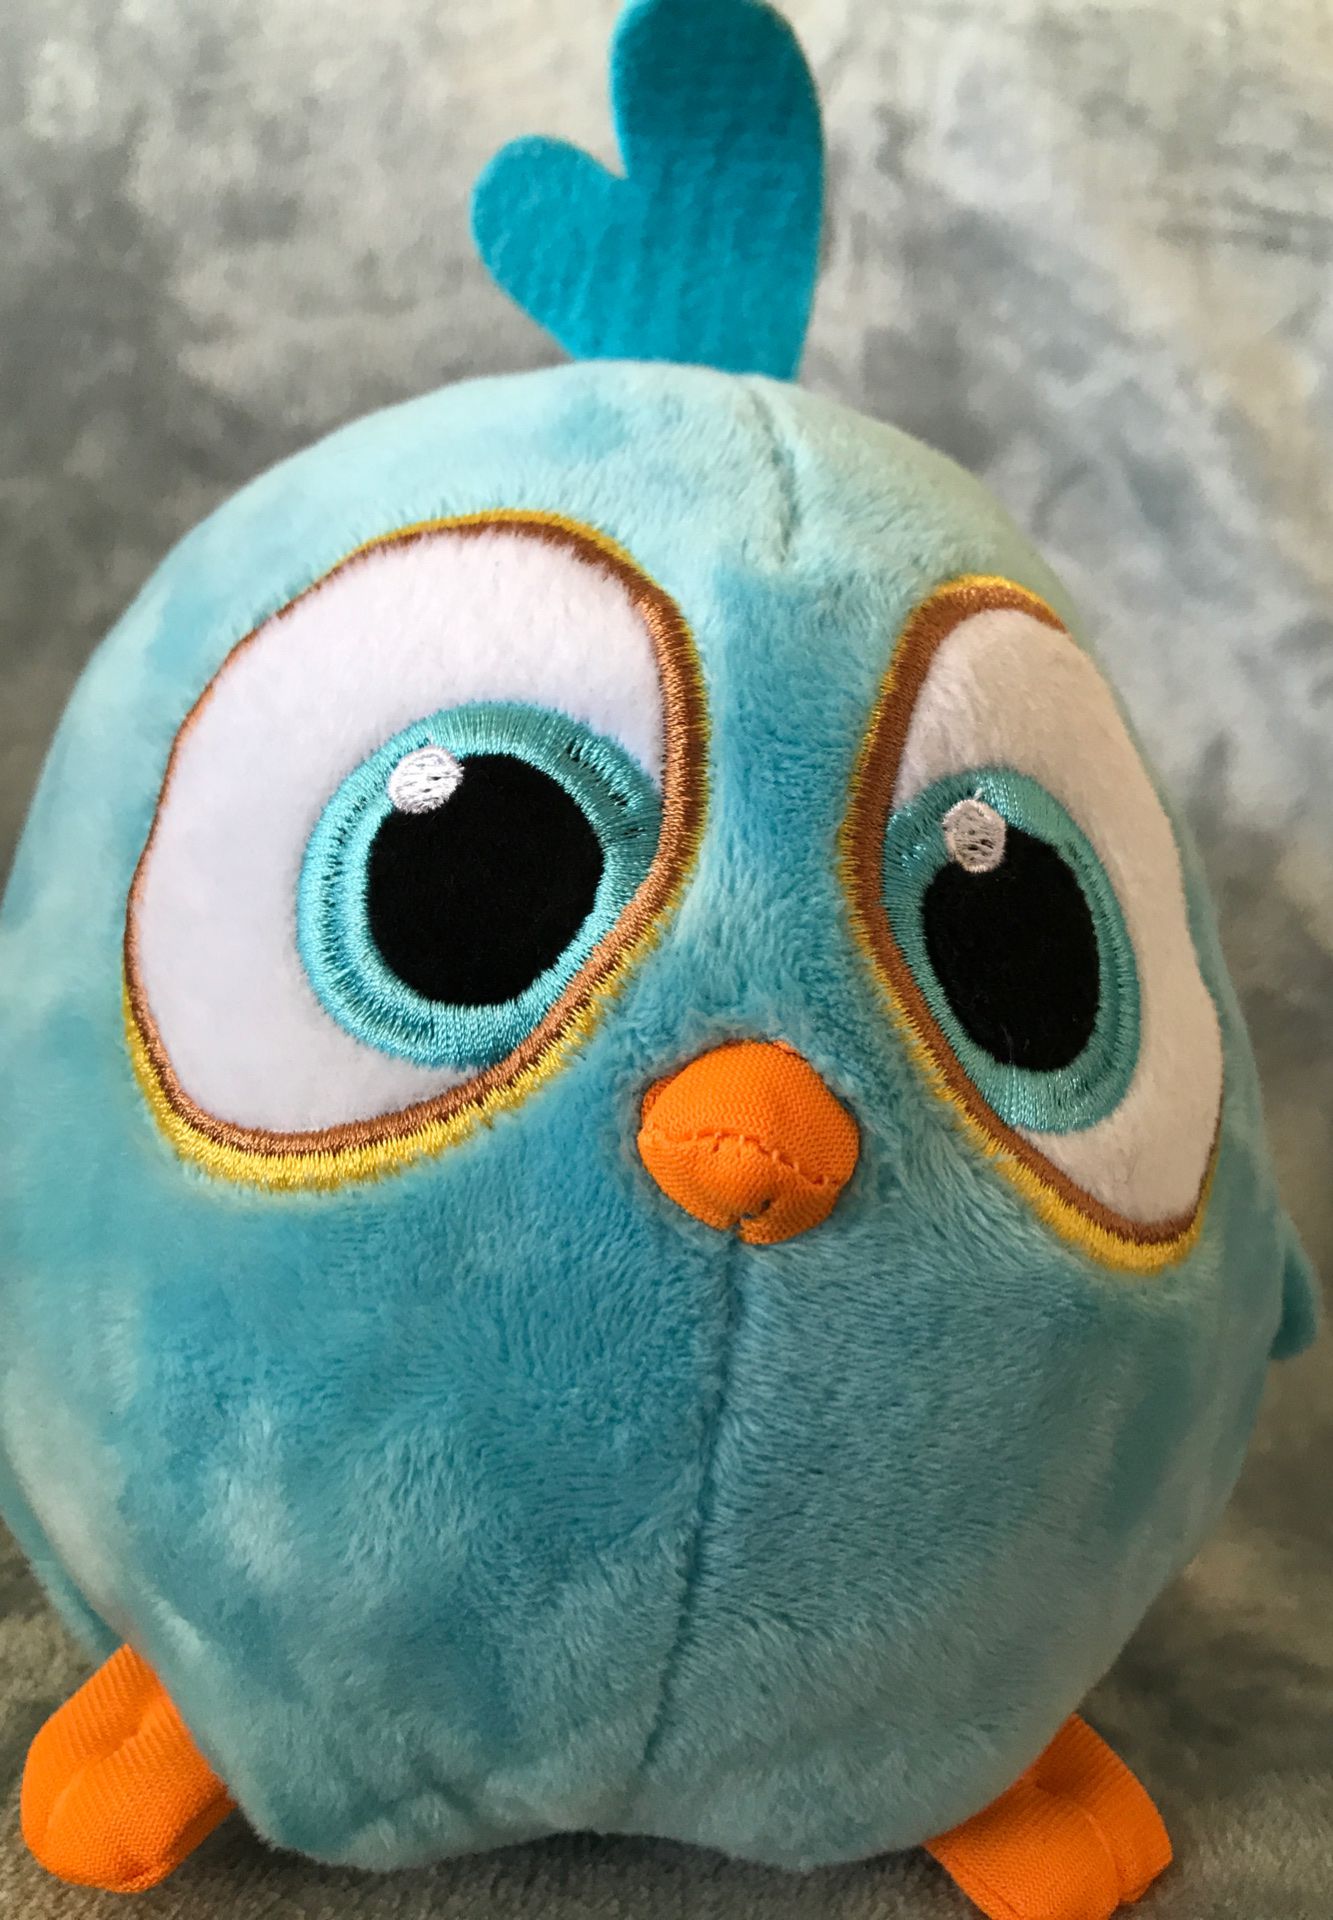 8” Angry Birds stuffed animal